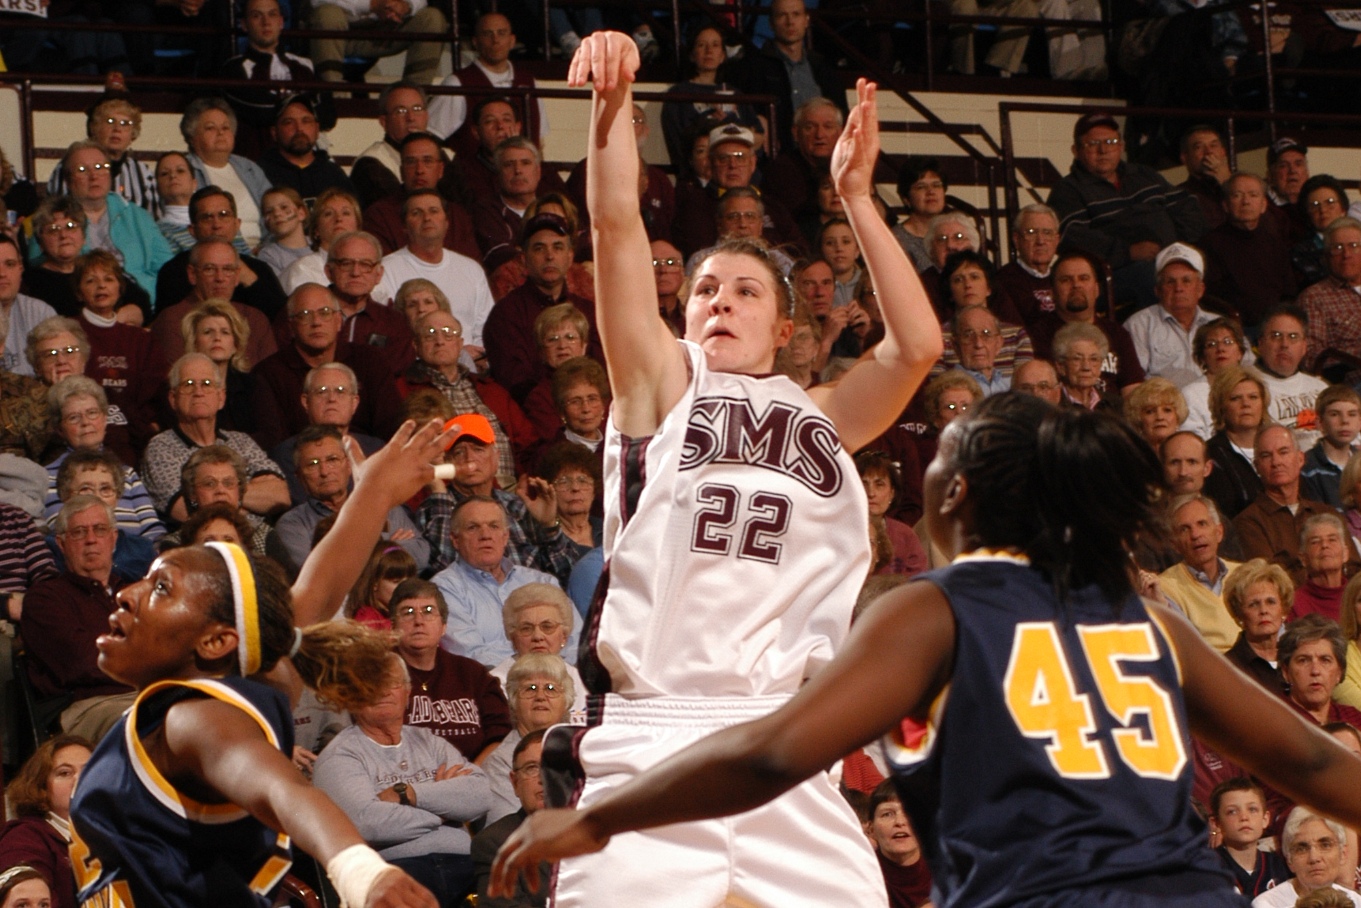 Kari Koch-Dowell, wearing an SMS Lady Bears uniform, shoots the basketball during a game.